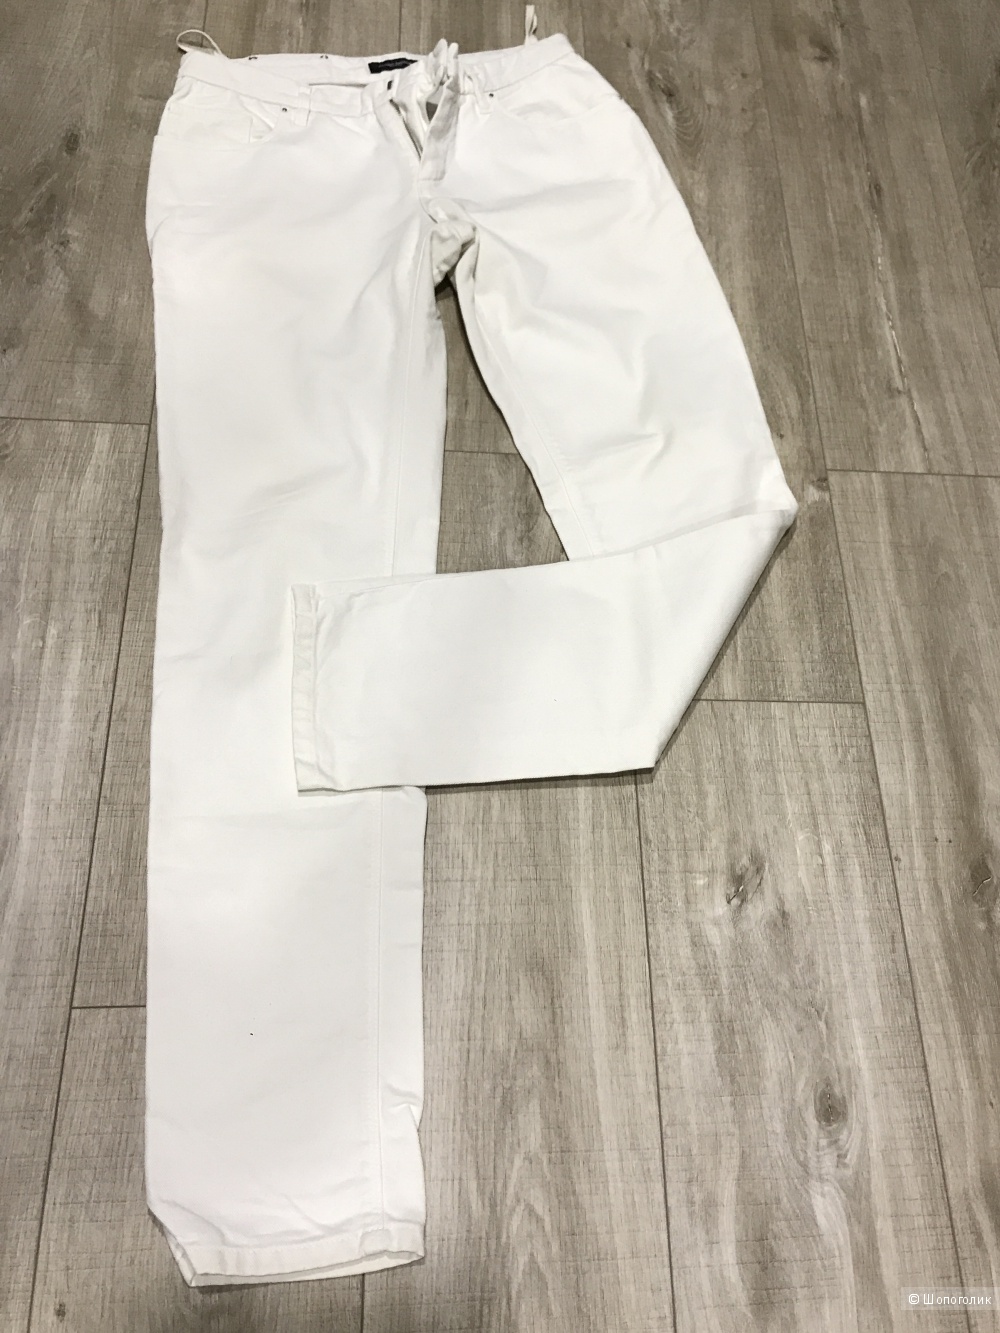 Costume National мужские белые джинсы, 46 IT размер